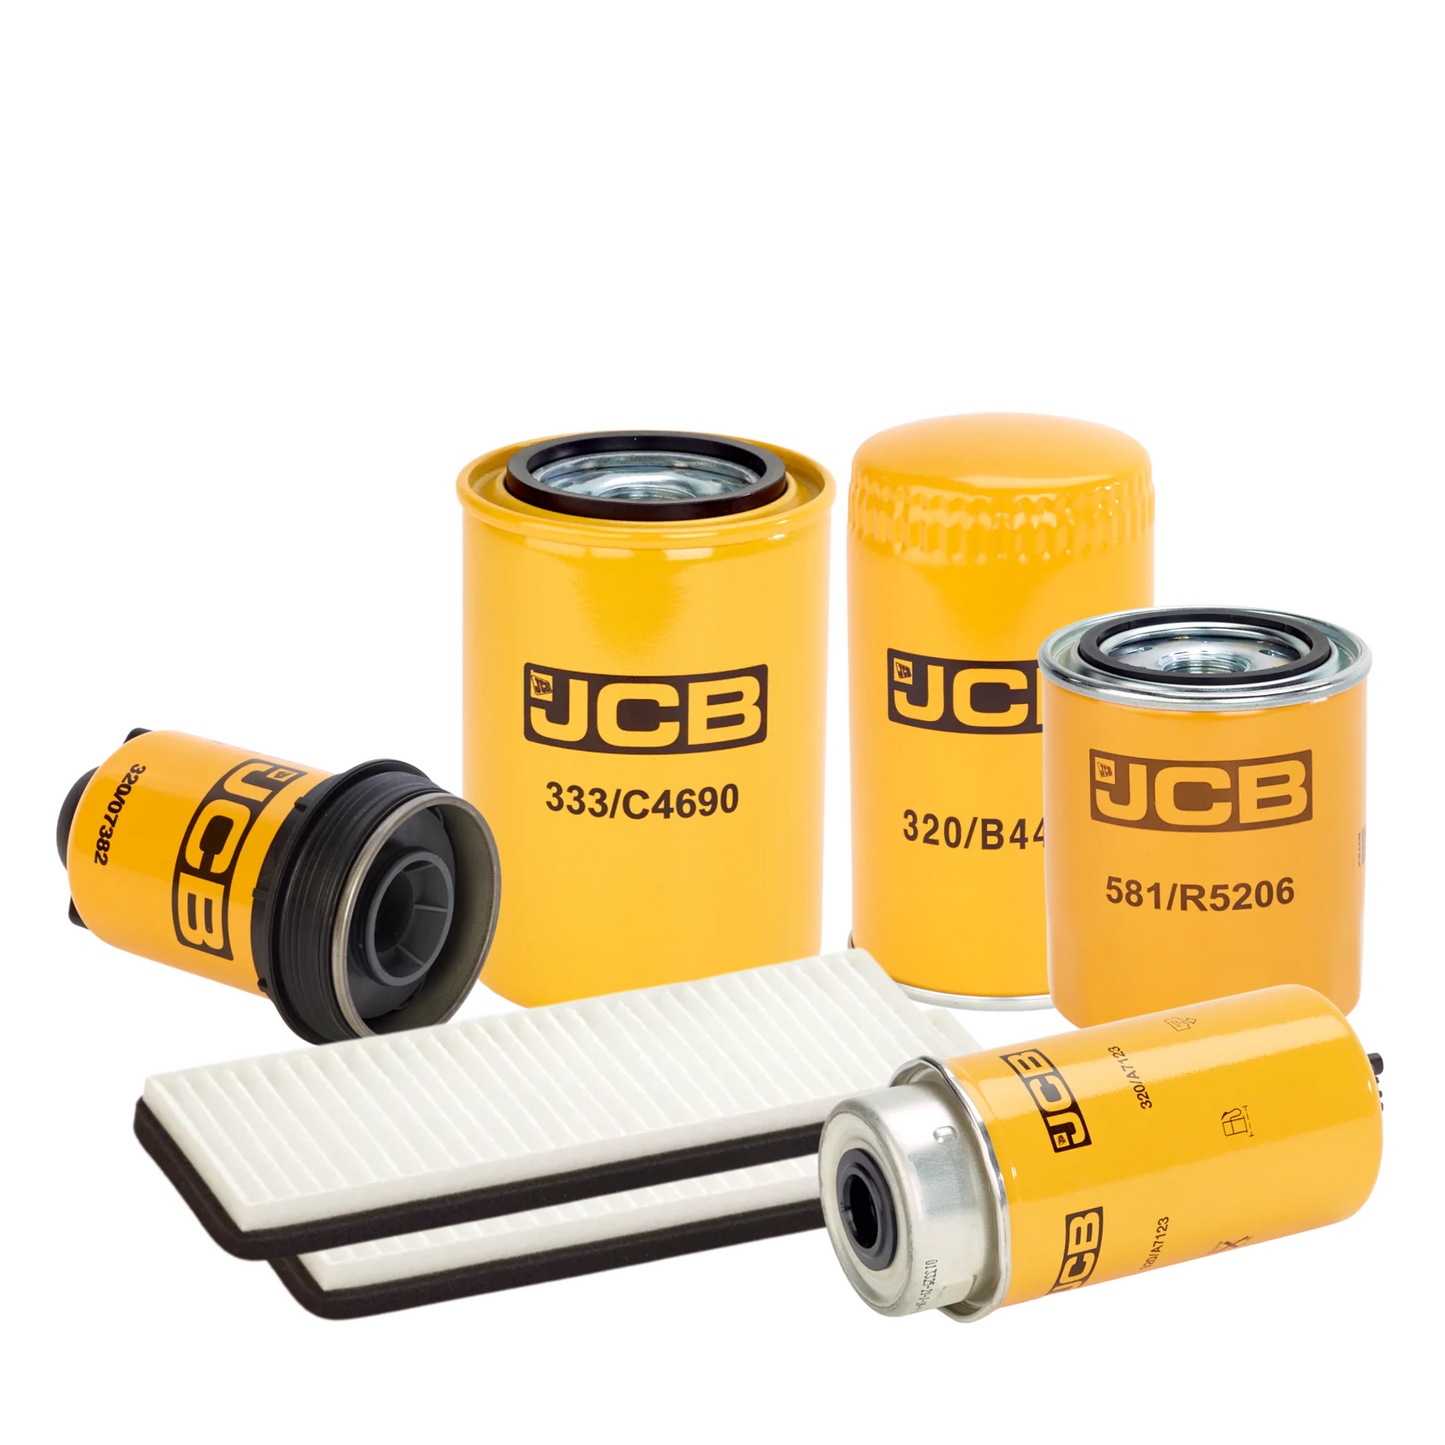 JCB 541-70 5500 Hour Filter Service Kit